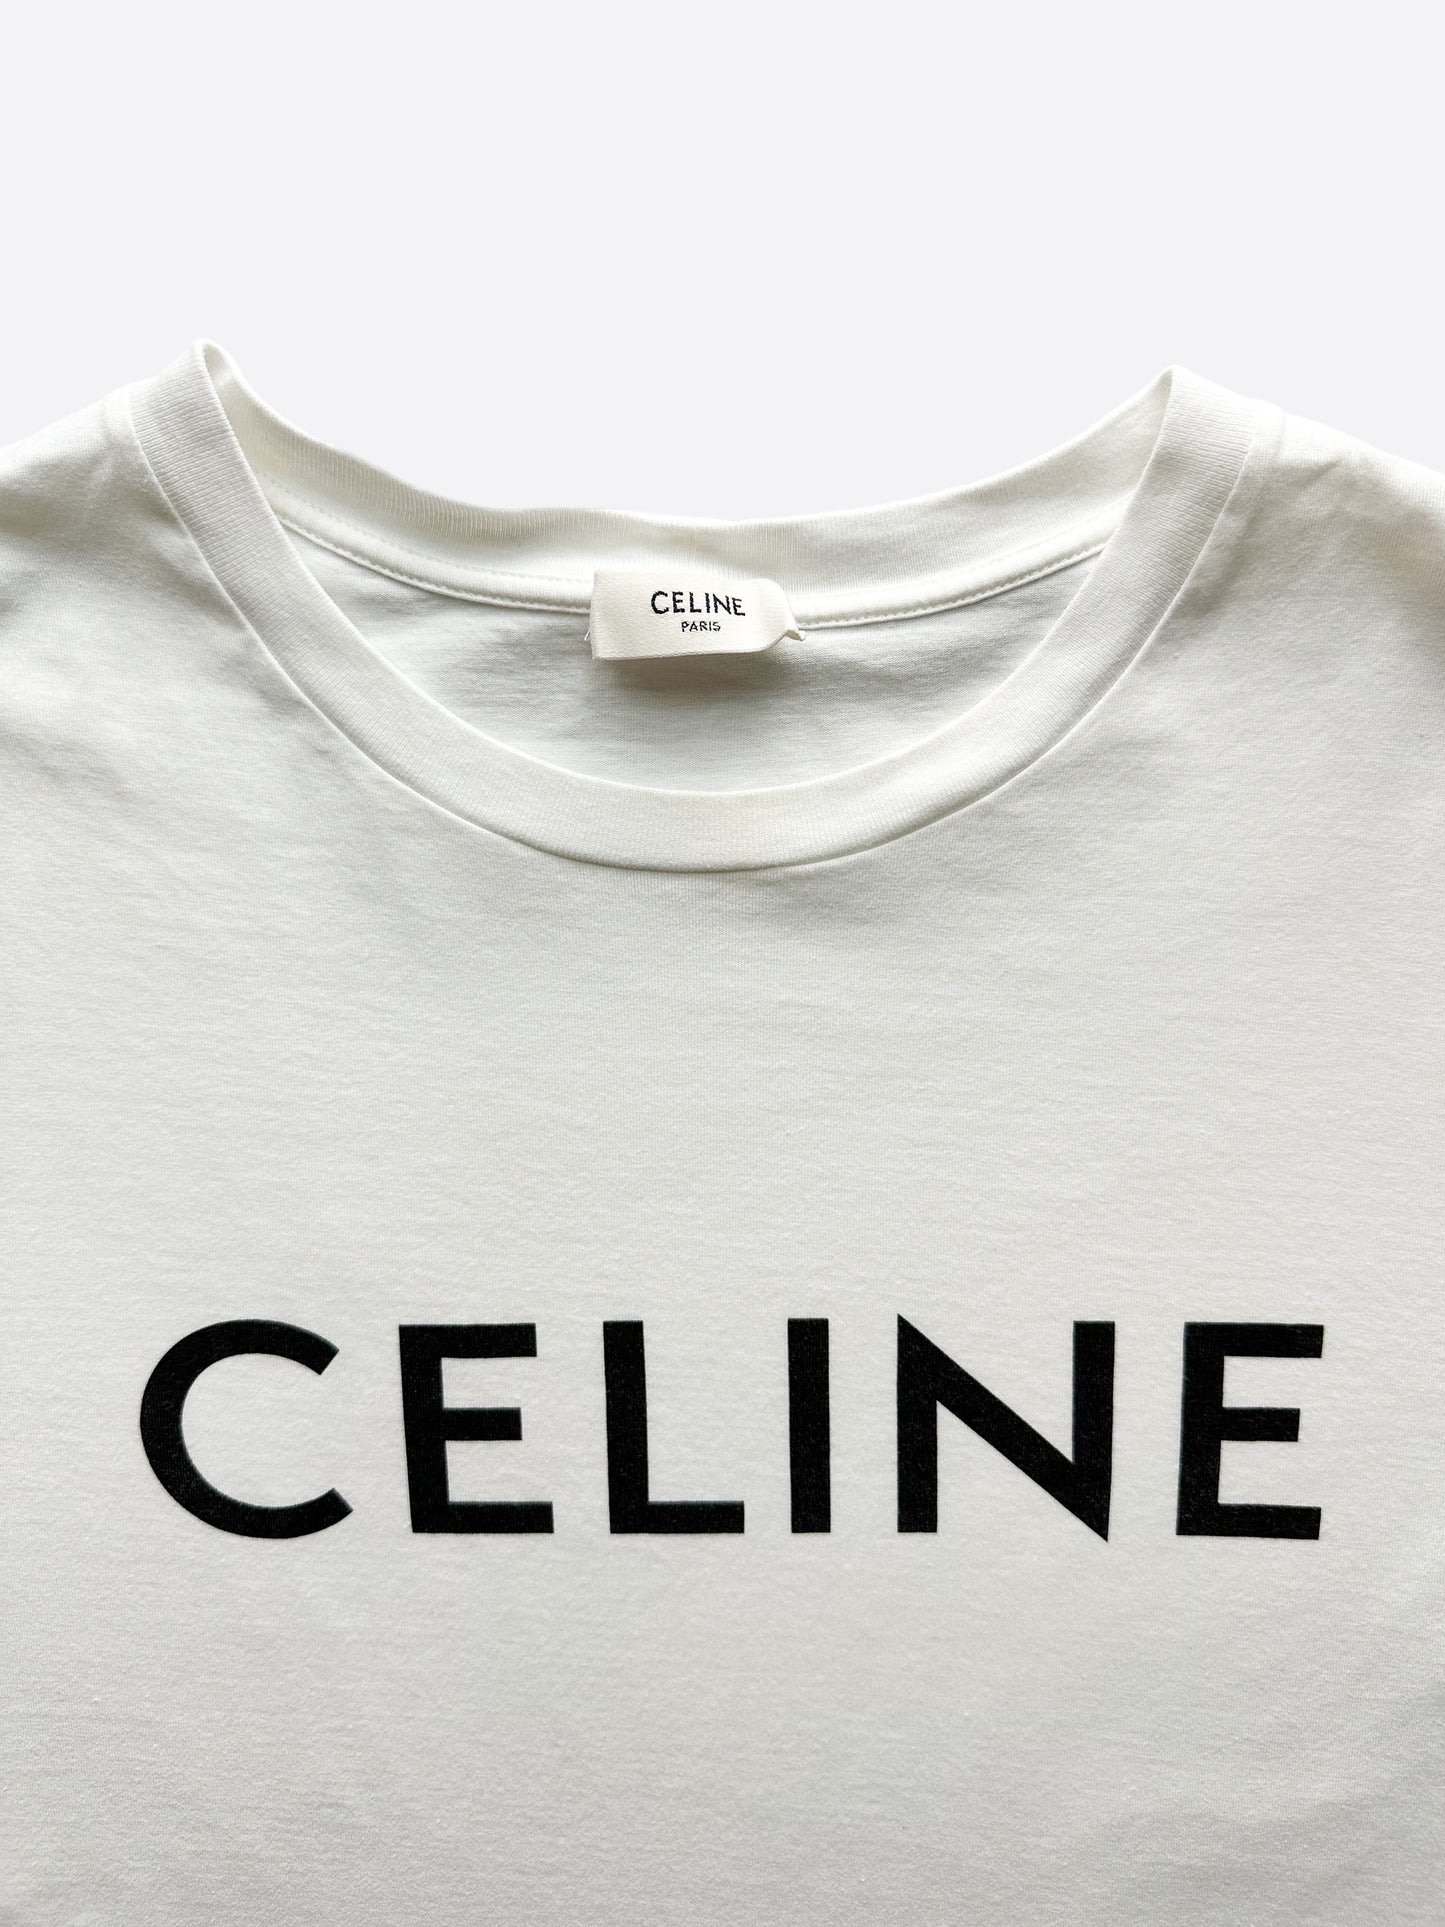 Celine logo woman's t-shirt – NYSummerShop